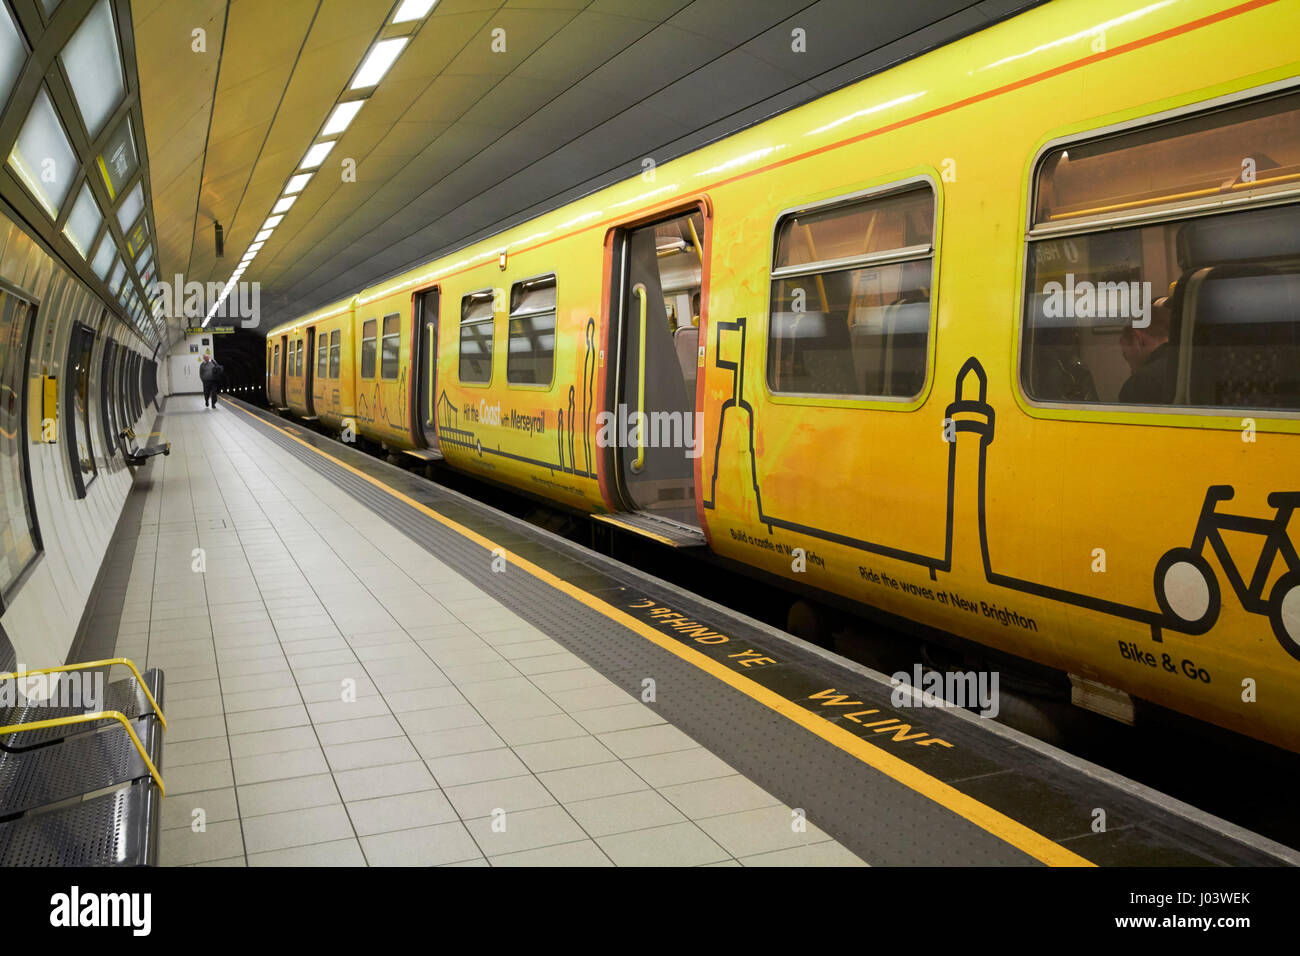 merseyrail train in james street underground train station Liverpool UK Stock Photo